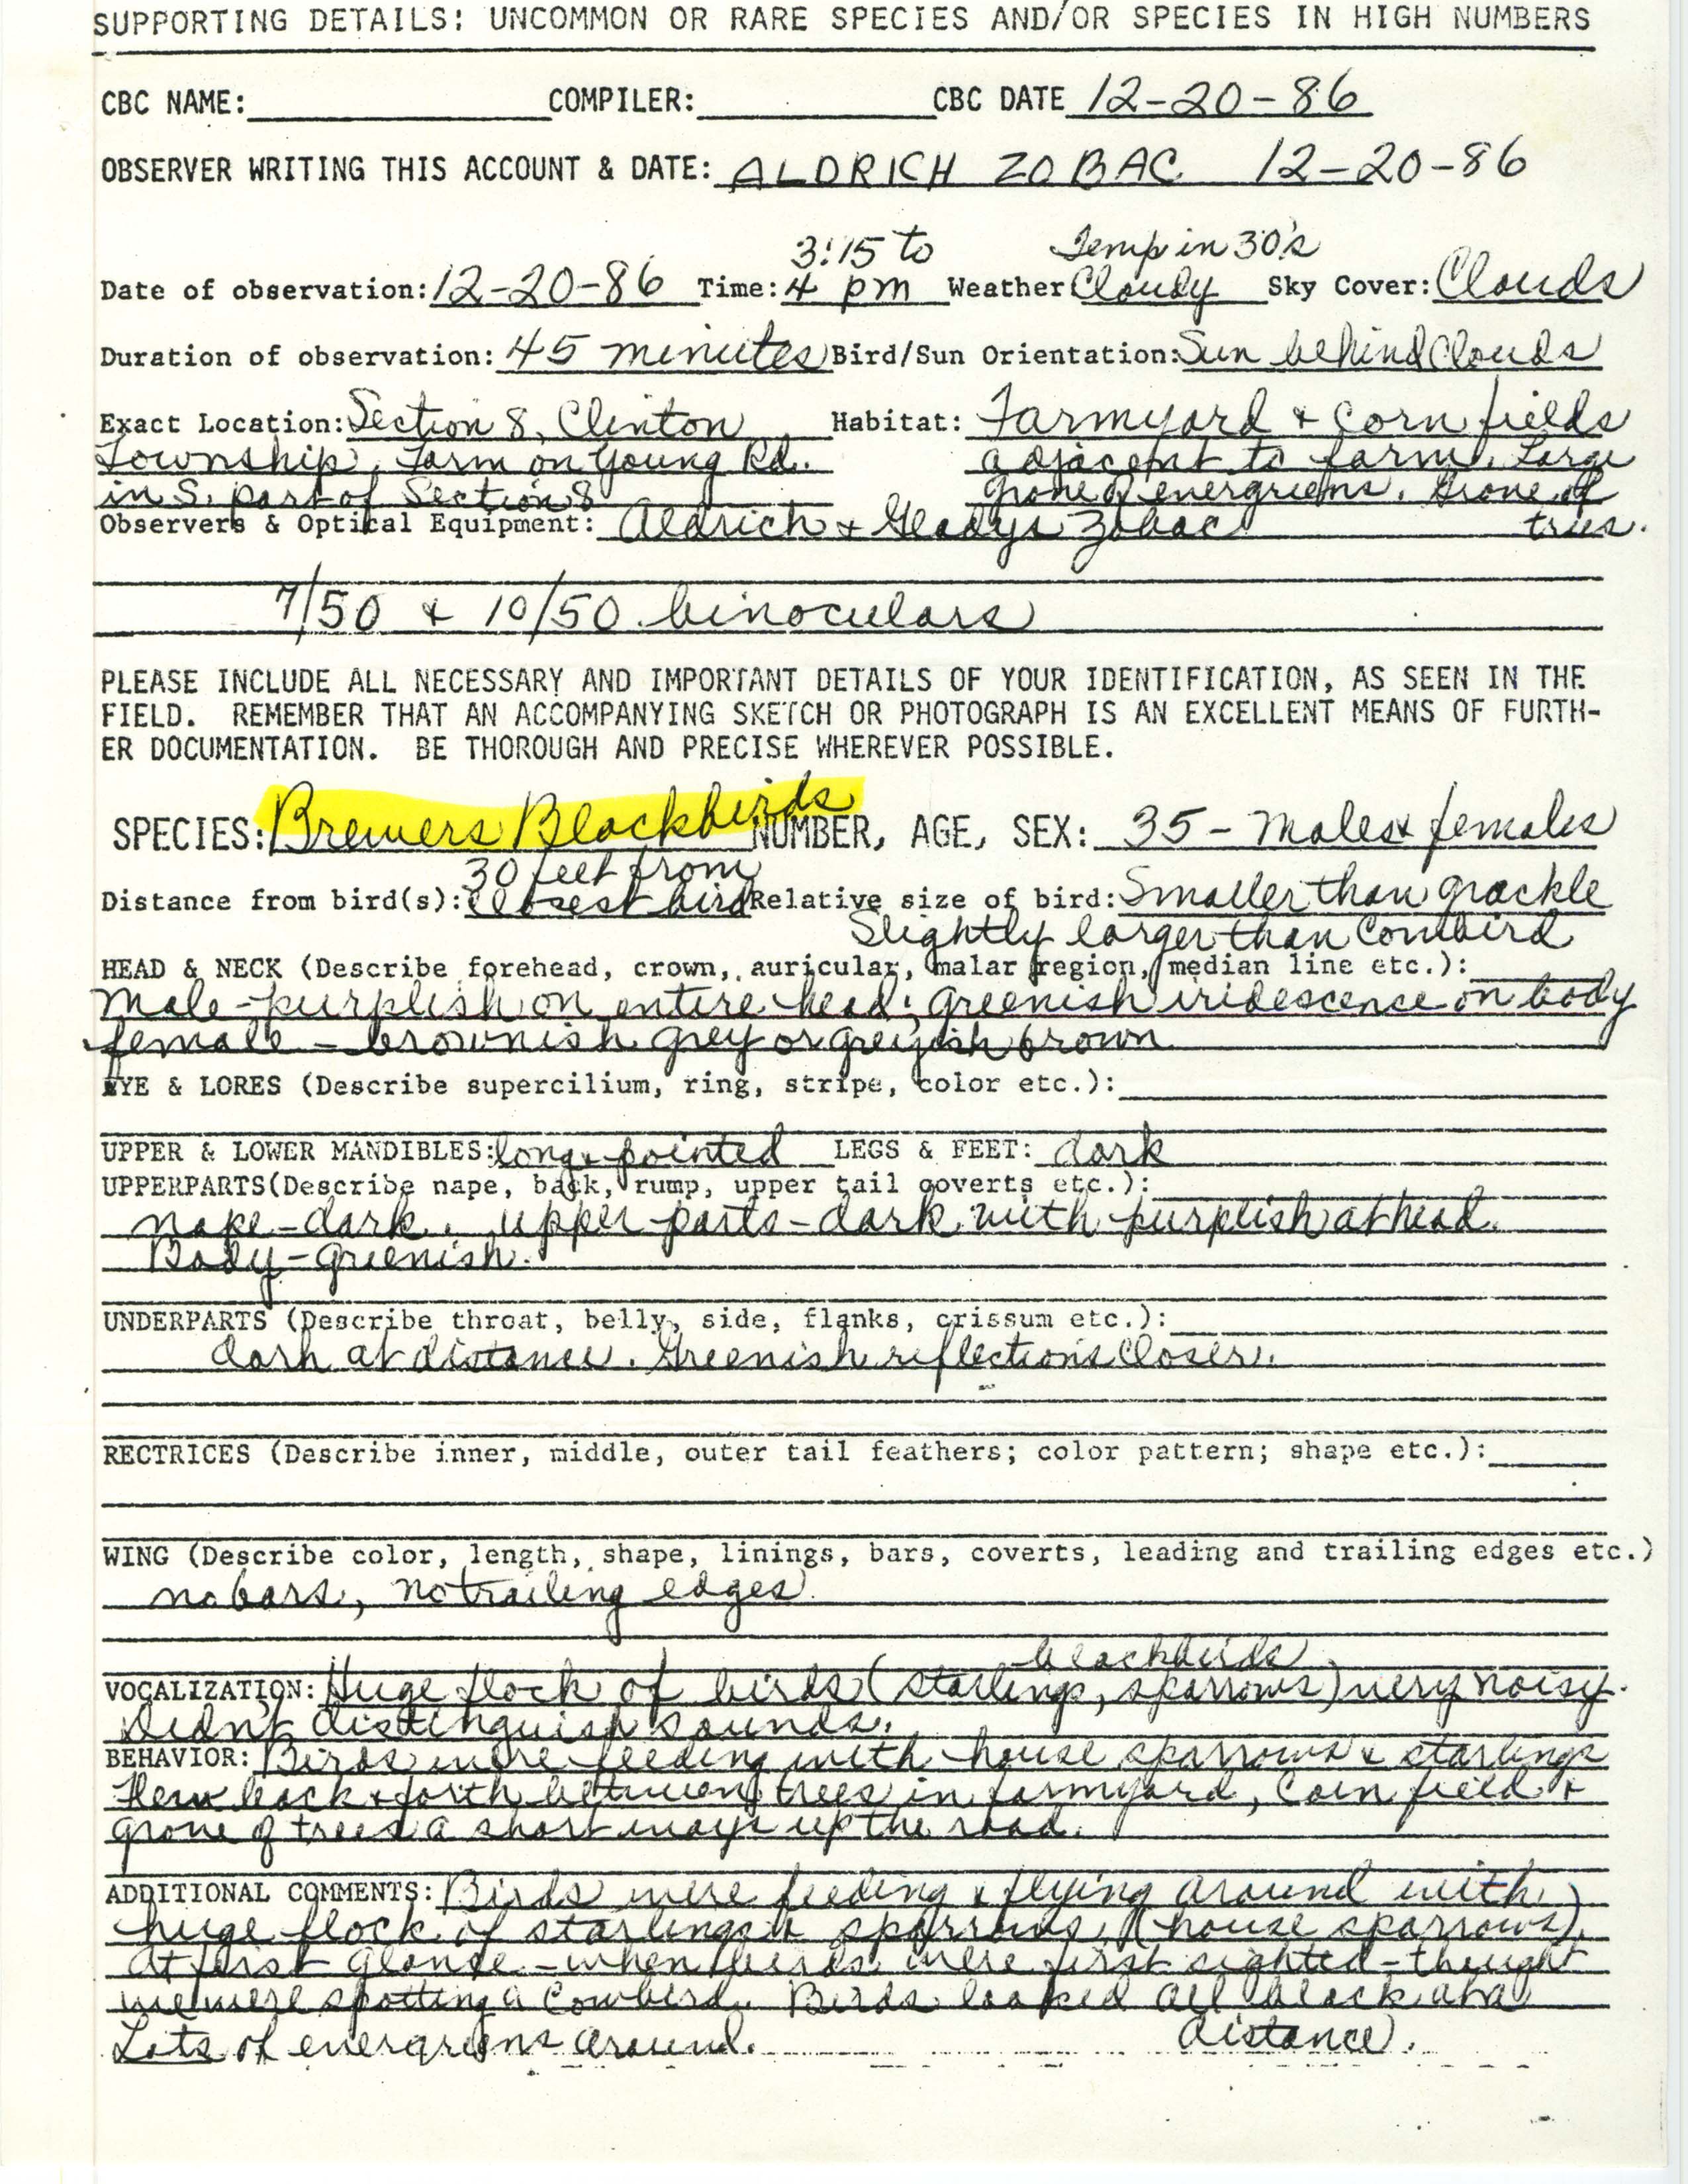 Rare bird documentation form for Brewer's Blackbird at Clinton Township in Linn County, 1986